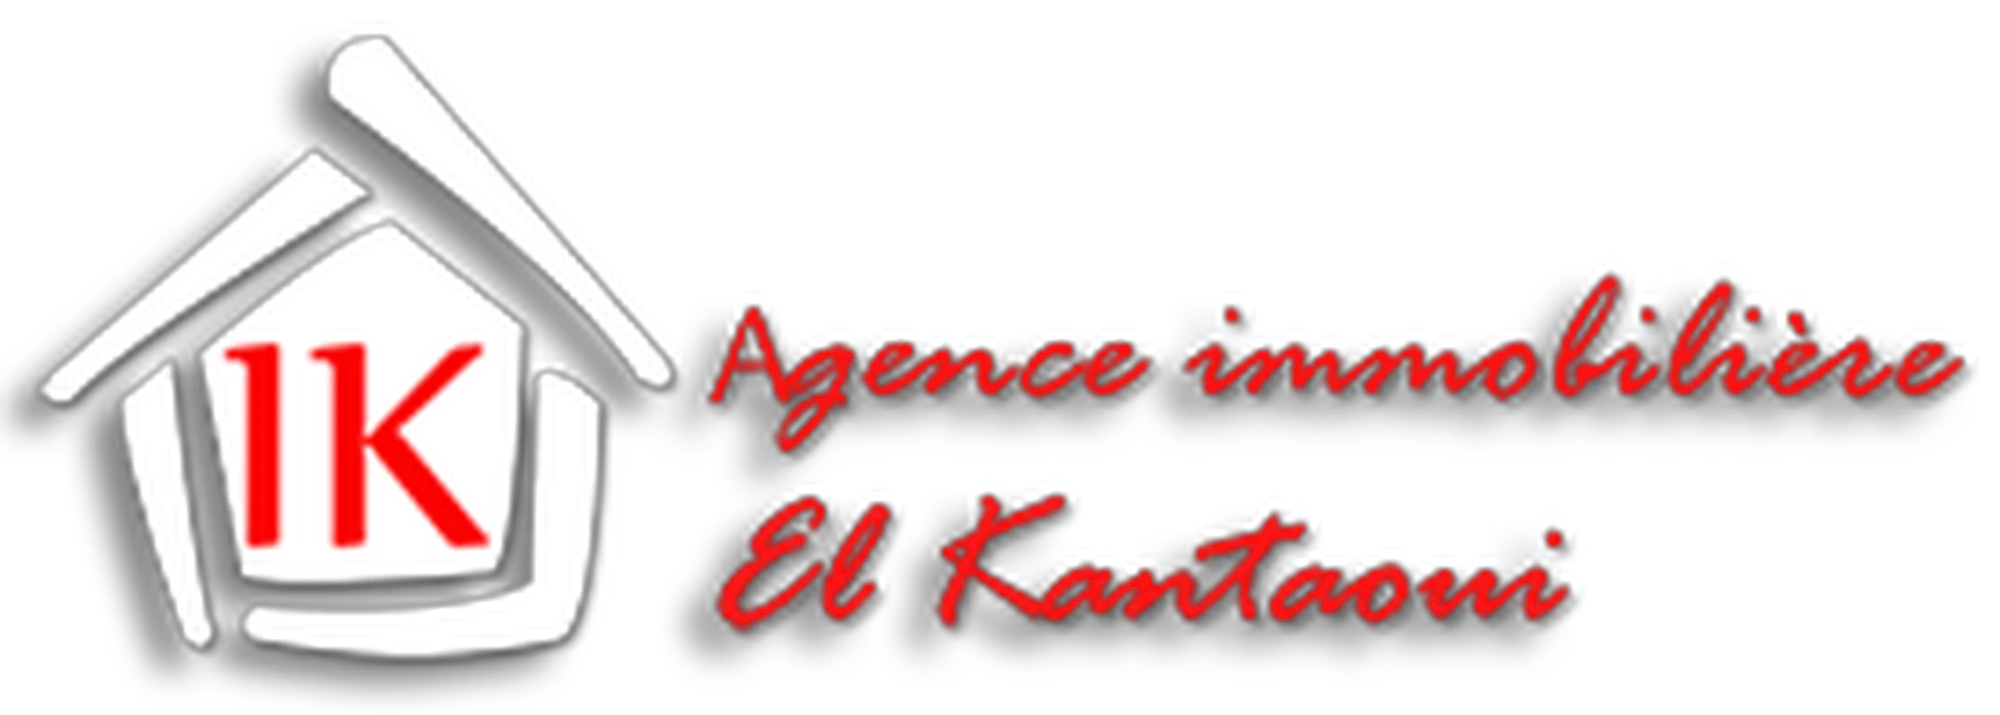 tayara shop cover of AGENCE IMMOBILIERE EL KANTAOUI